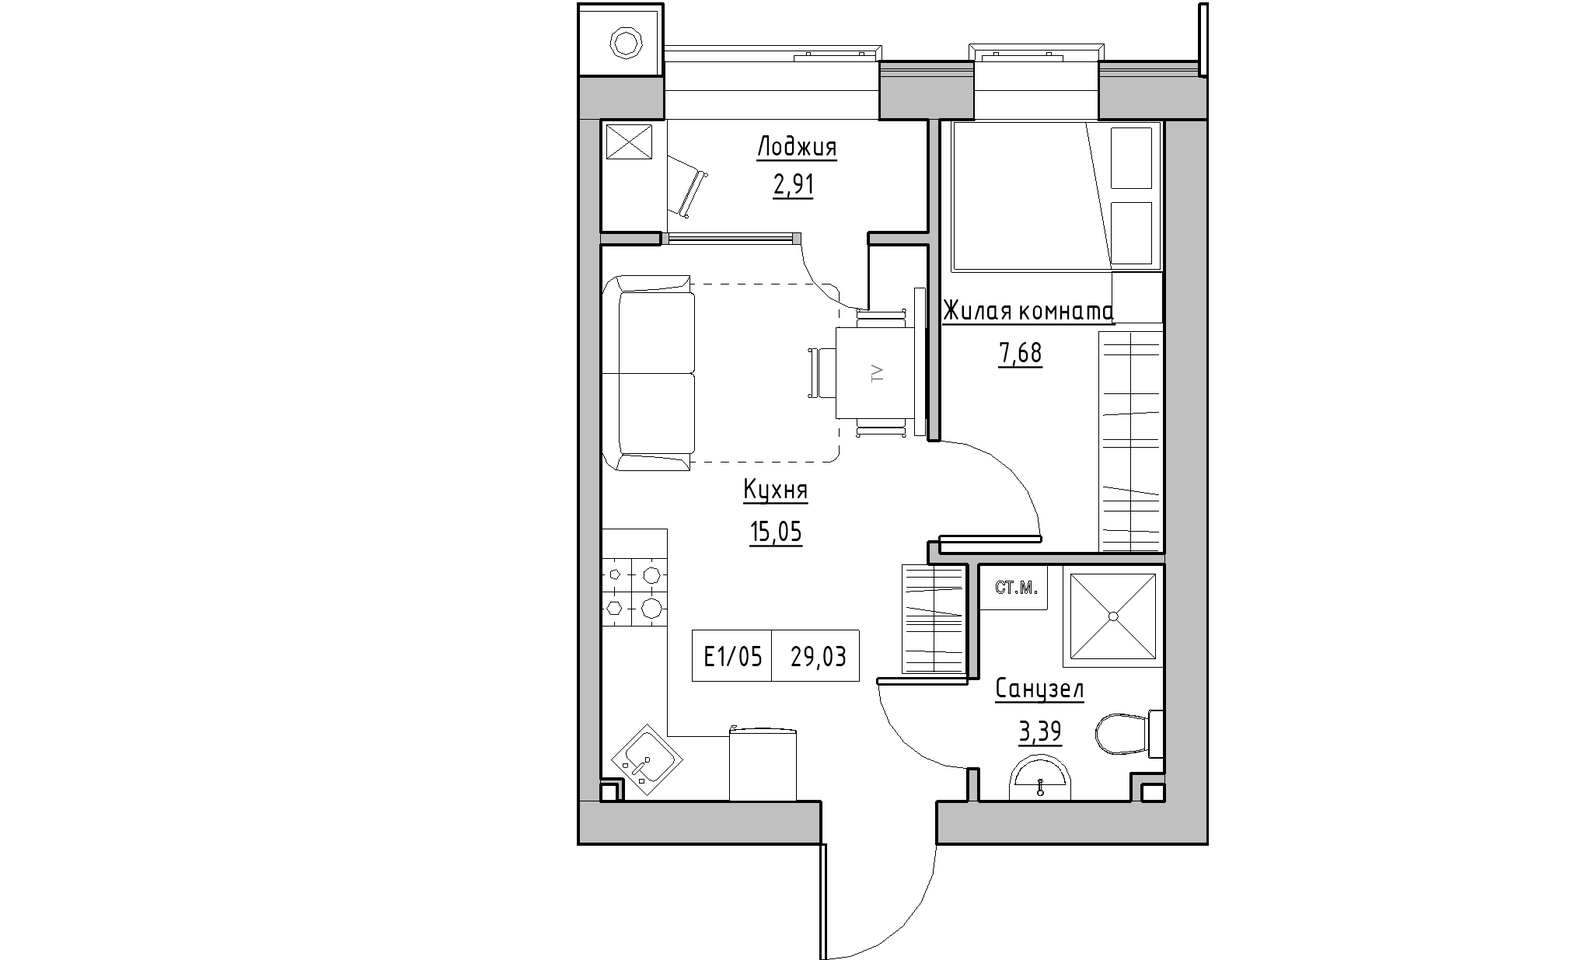 Planning 1-rm flats area 29.03m2, KS-014-02/0007.